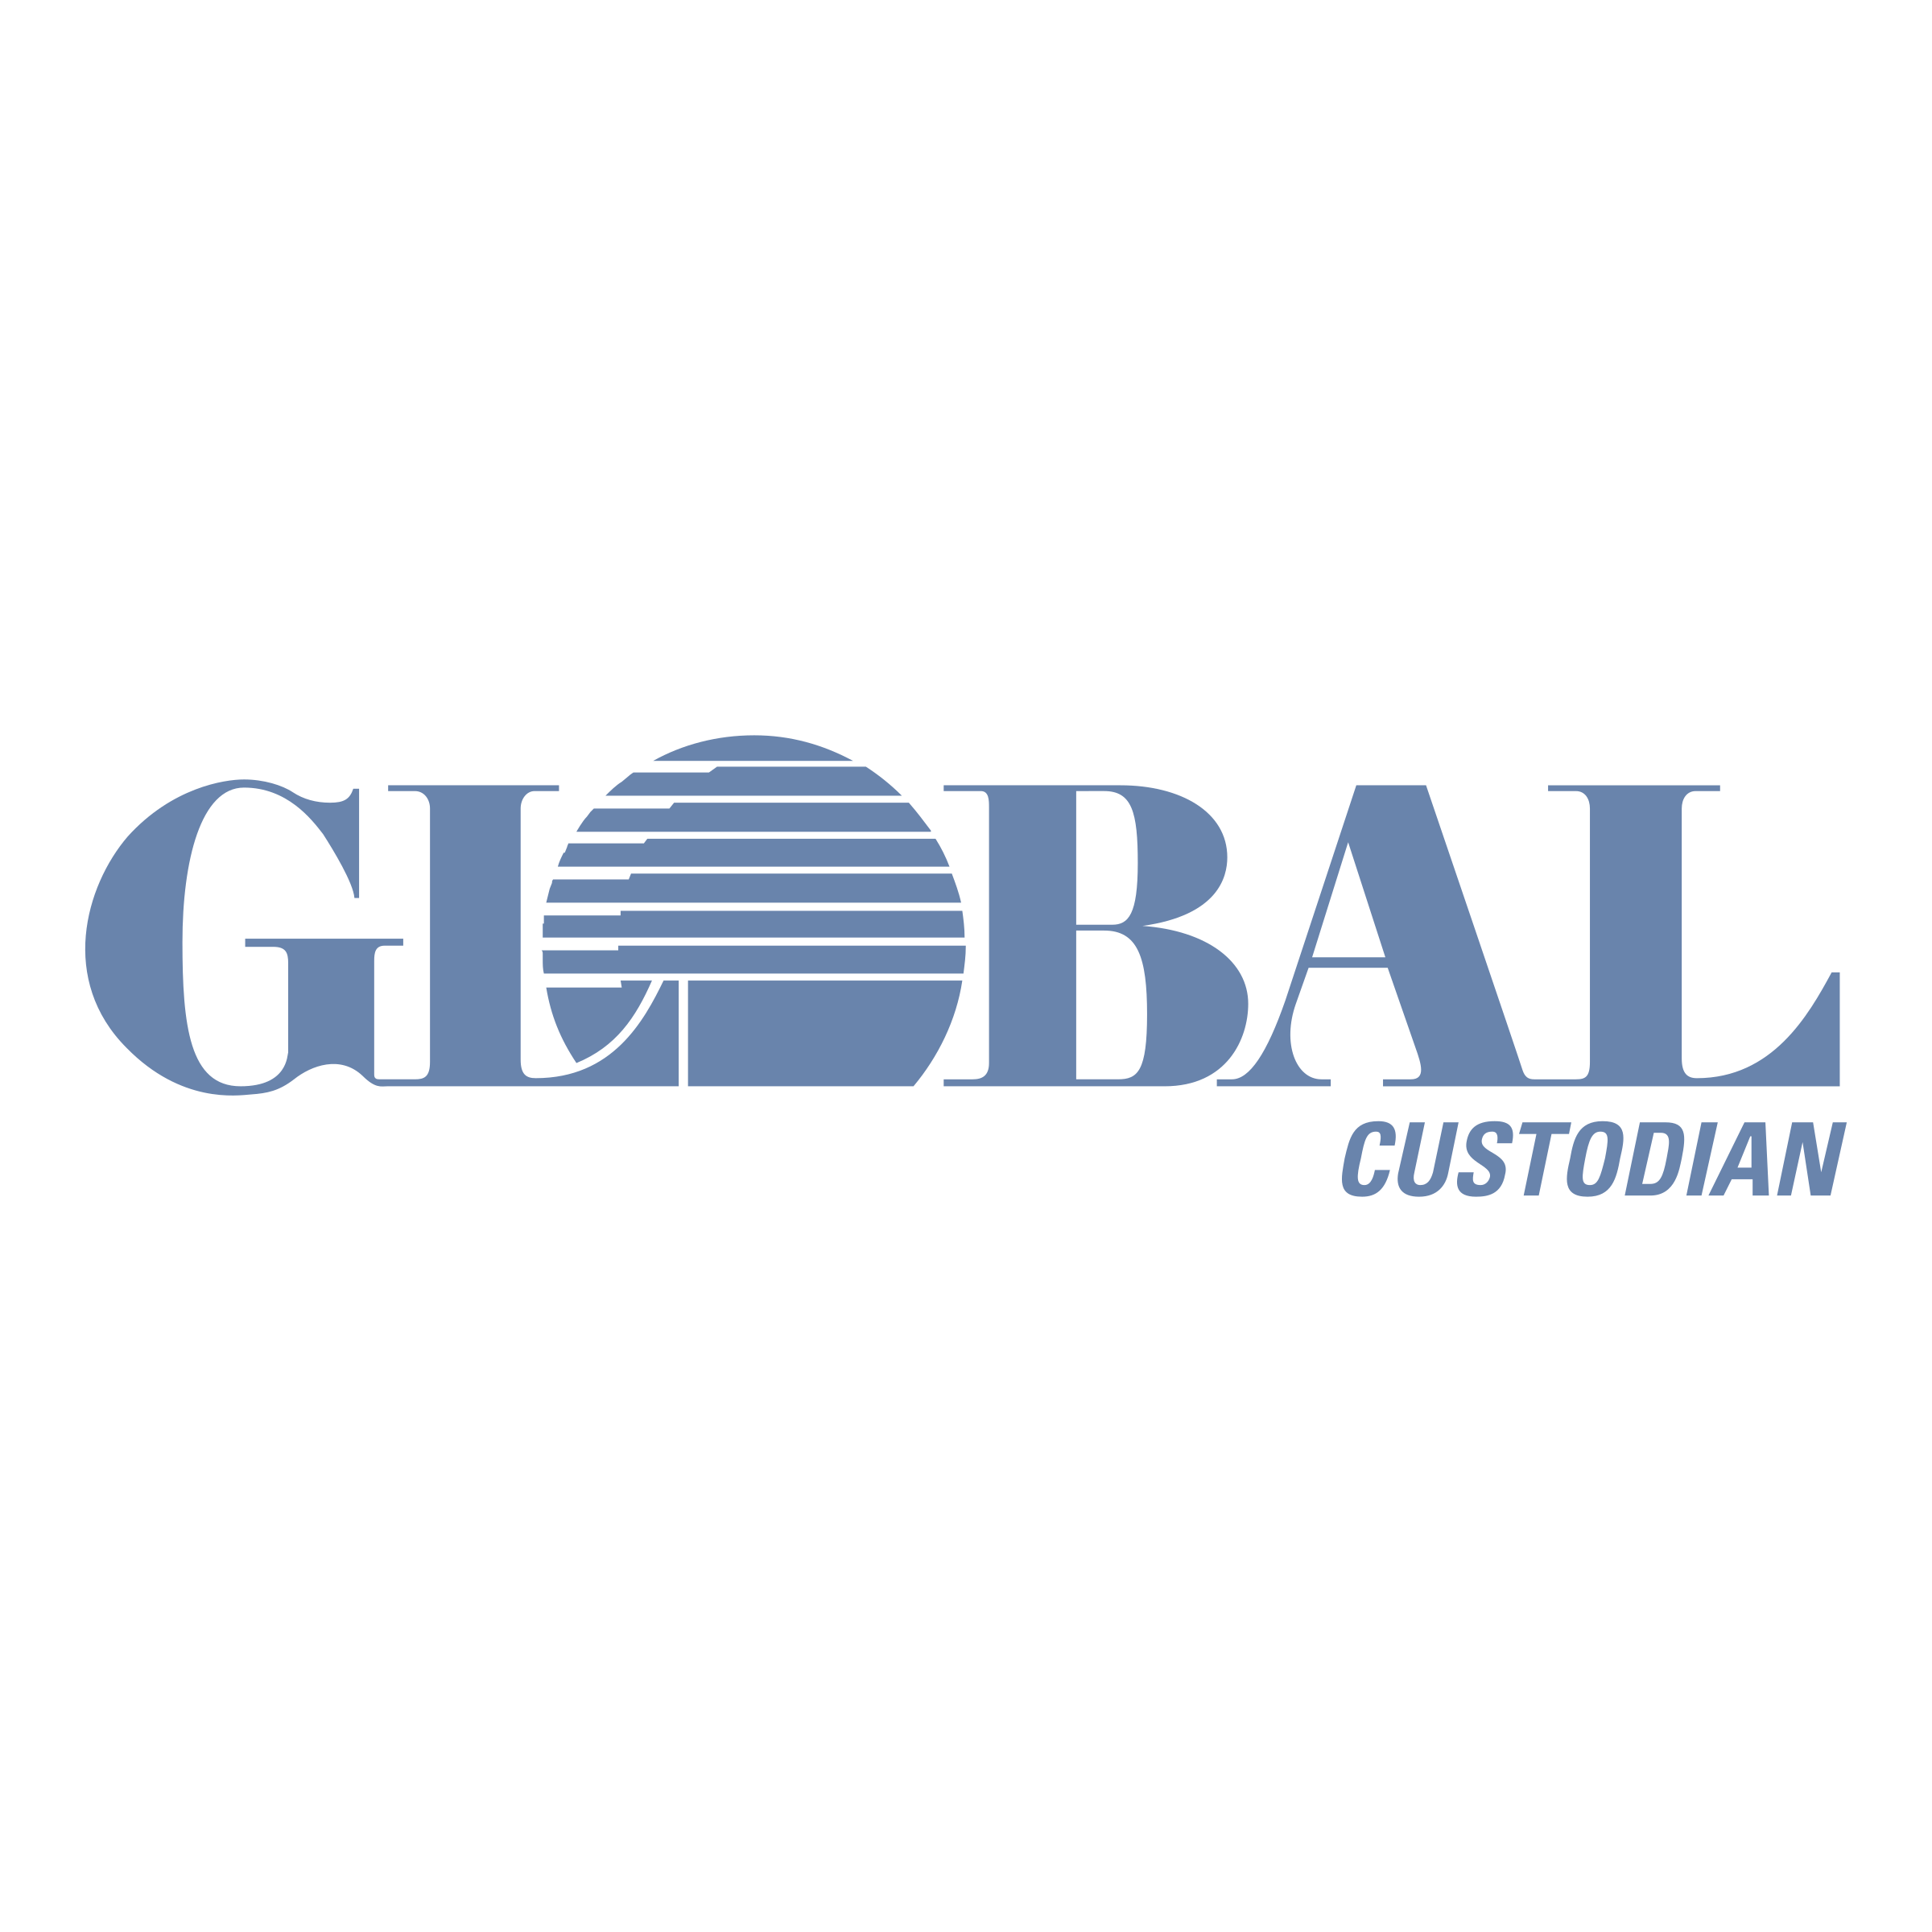 Custodian Logo - Global Custodian Logo PNG Transparent & SVG Vector - Freebie Supply